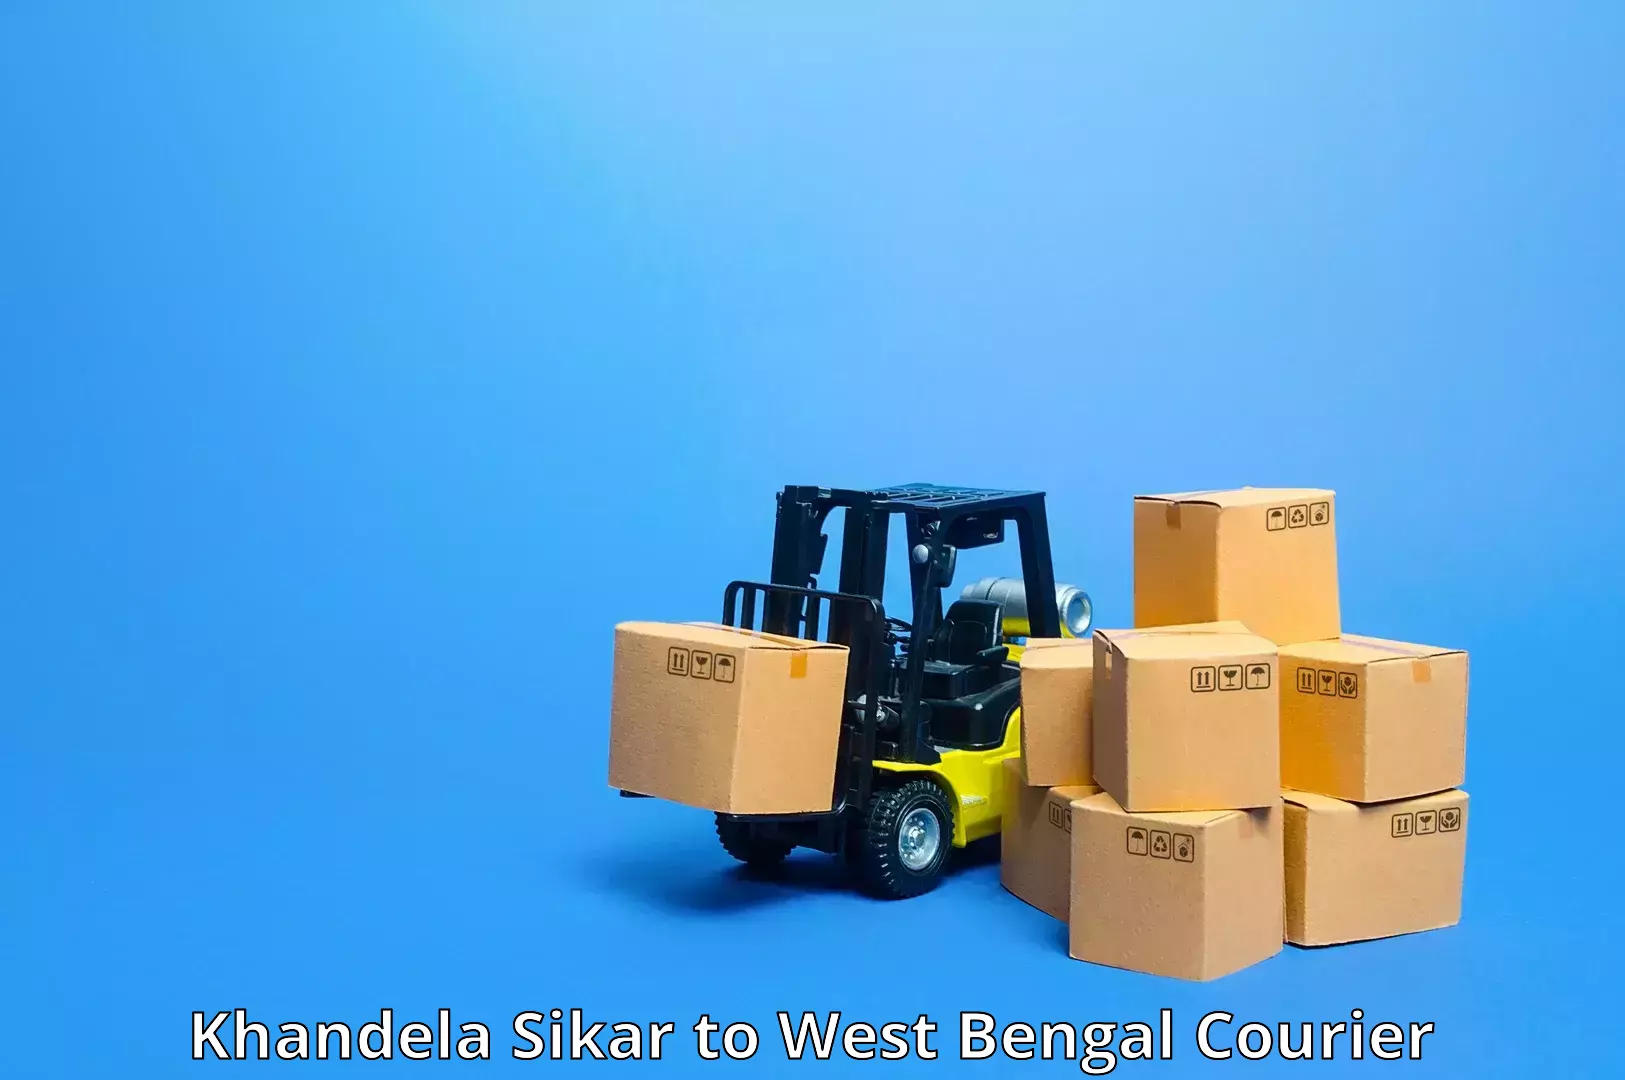 Urban courier service Khandela Sikar to Kolkata Port